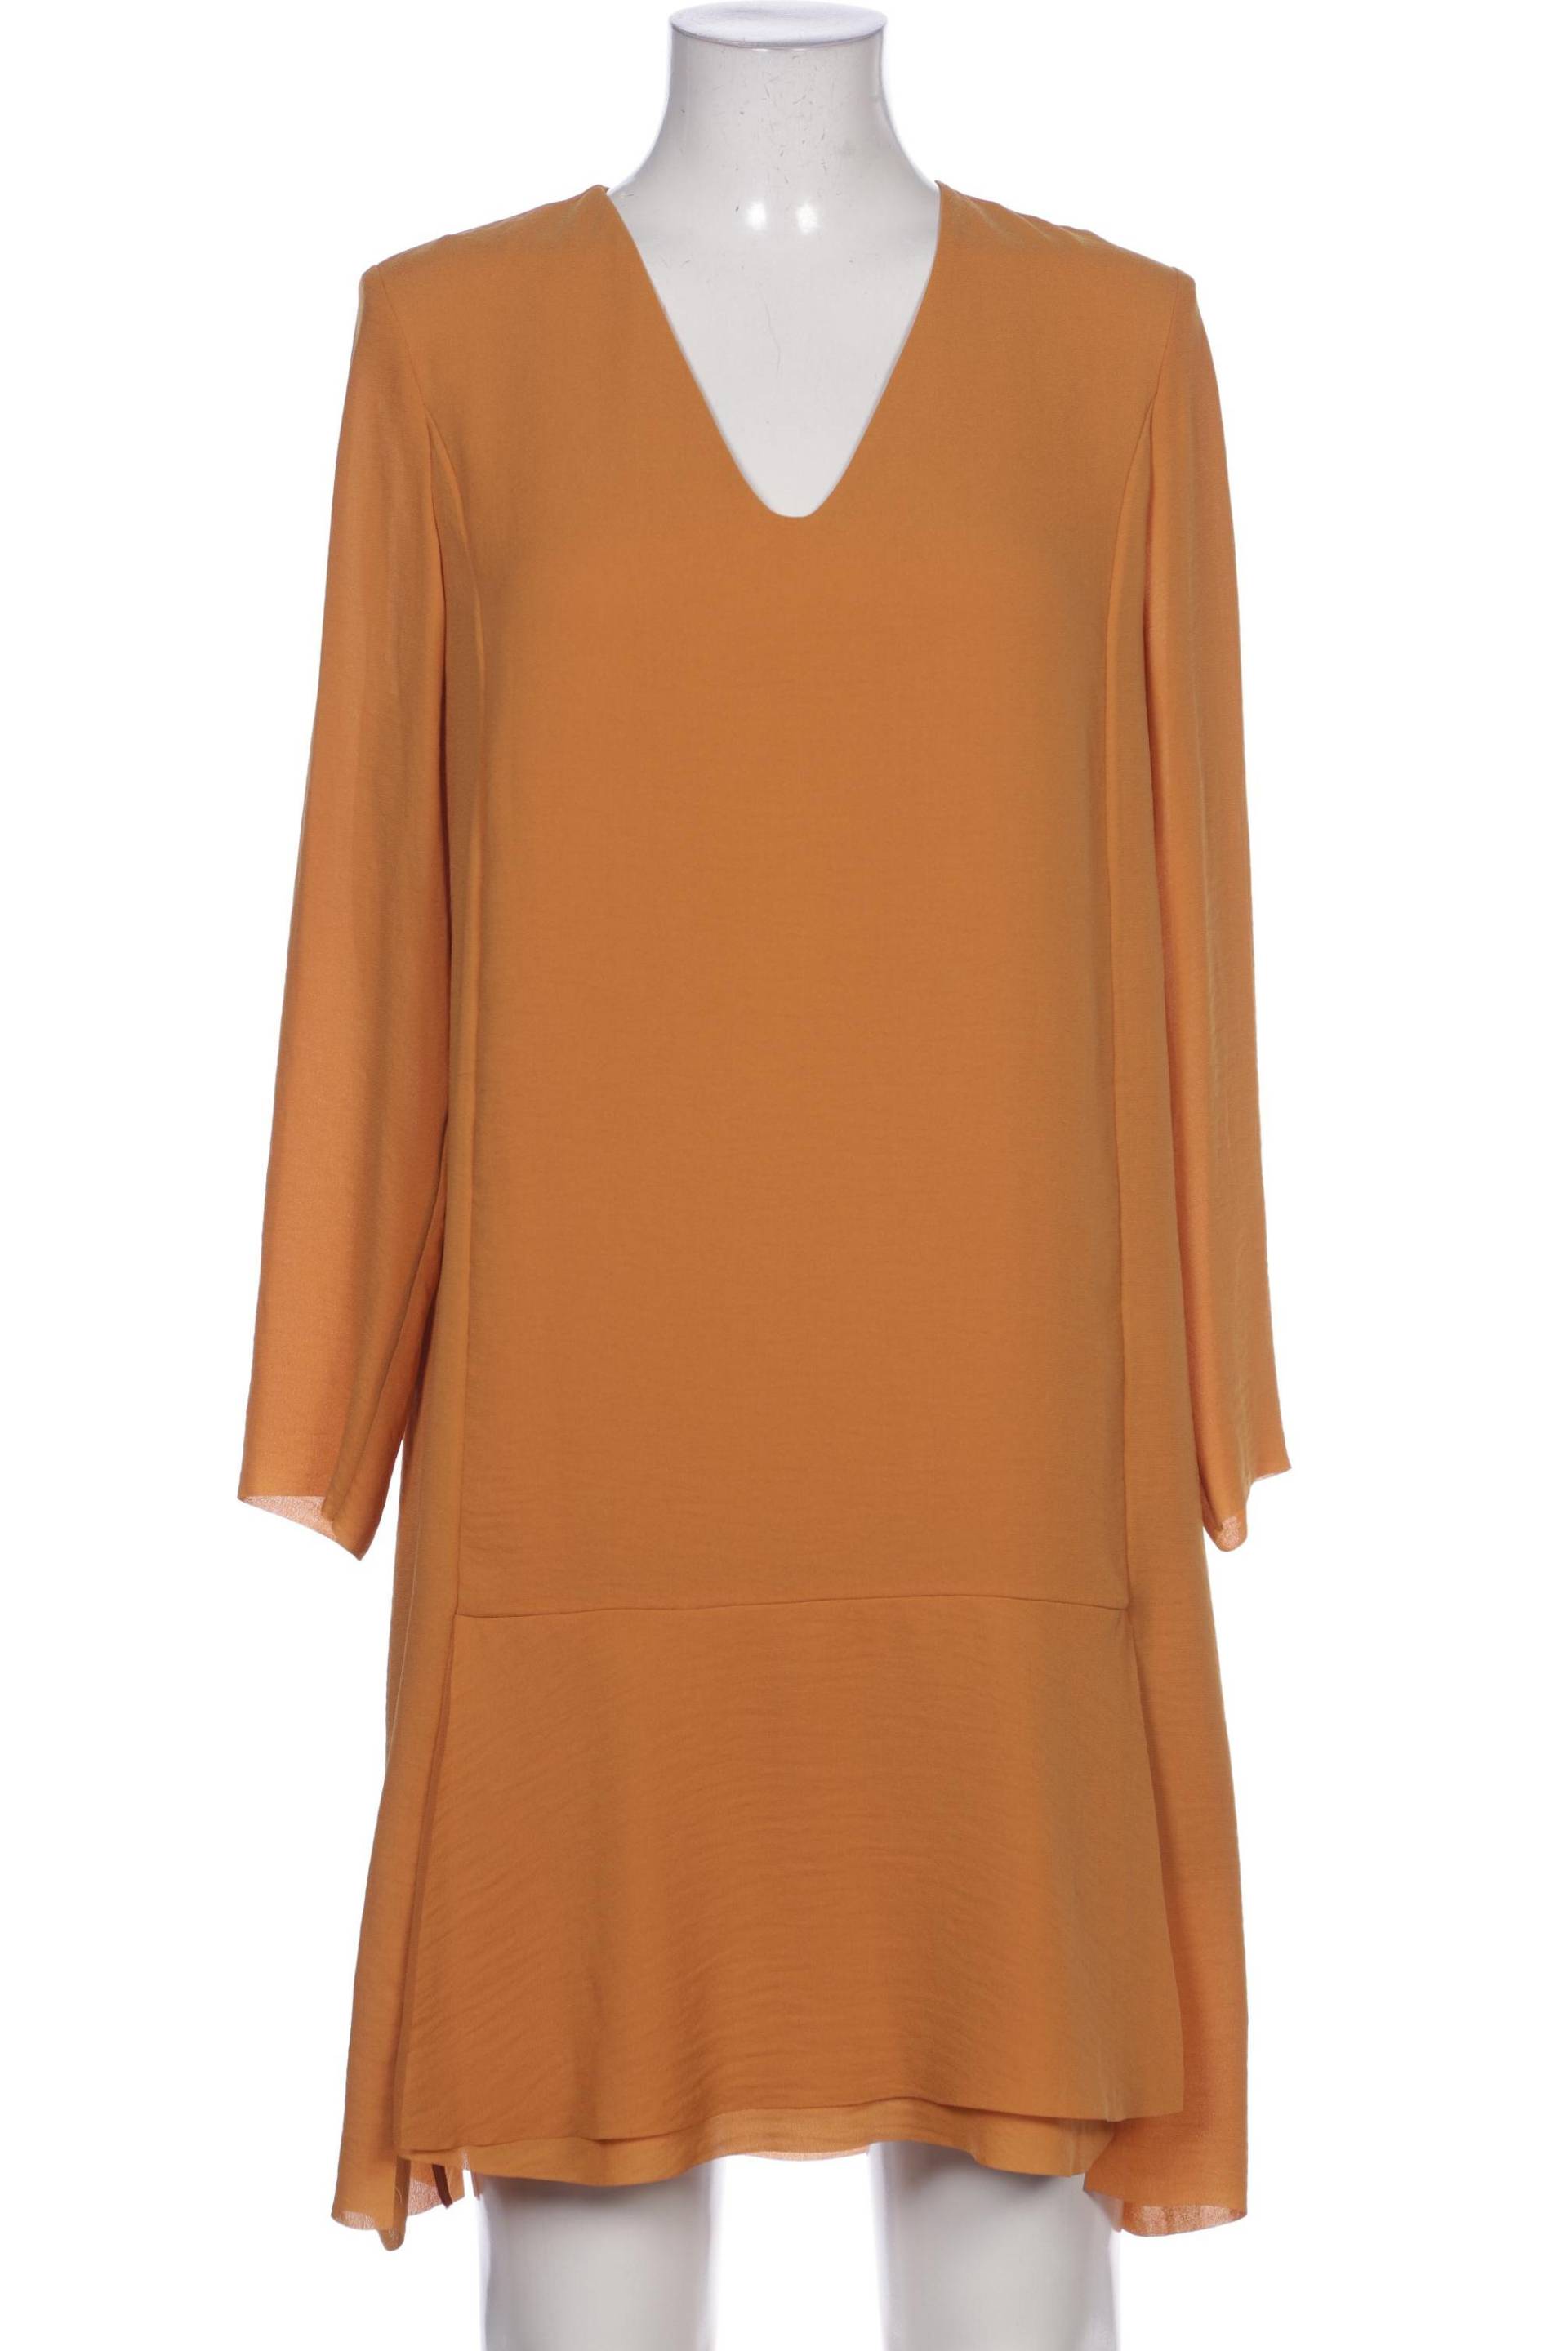 COS Damen Kleid, orange von COS